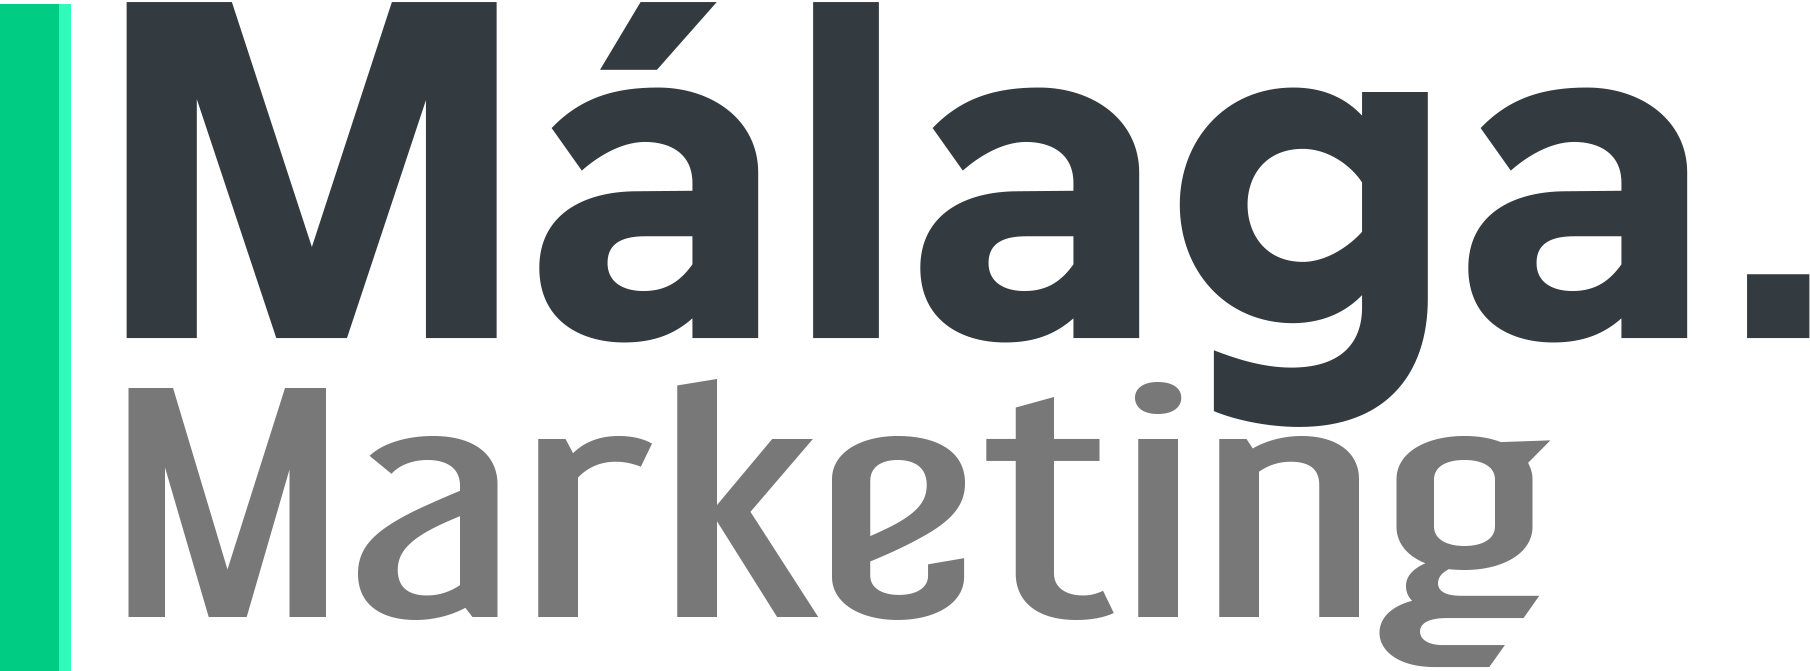 malaga.marketing-logo-verde2